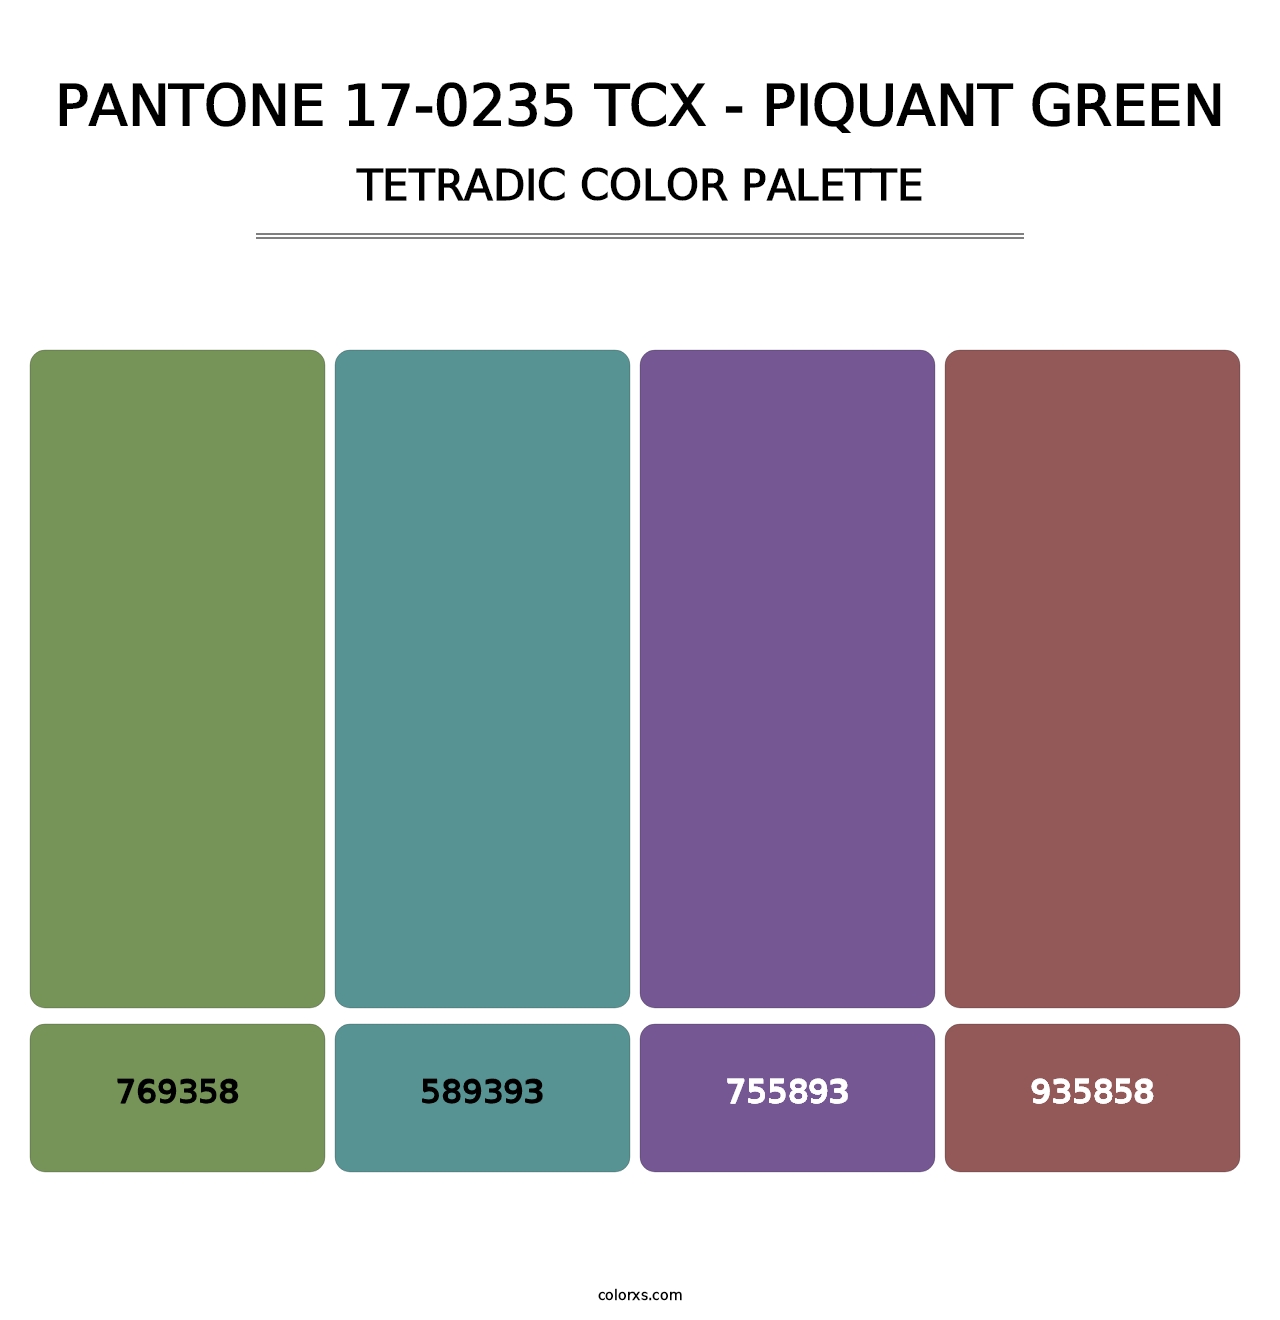 PANTONE 17-0235 TCX - Piquant Green - Tetradic Color Palette